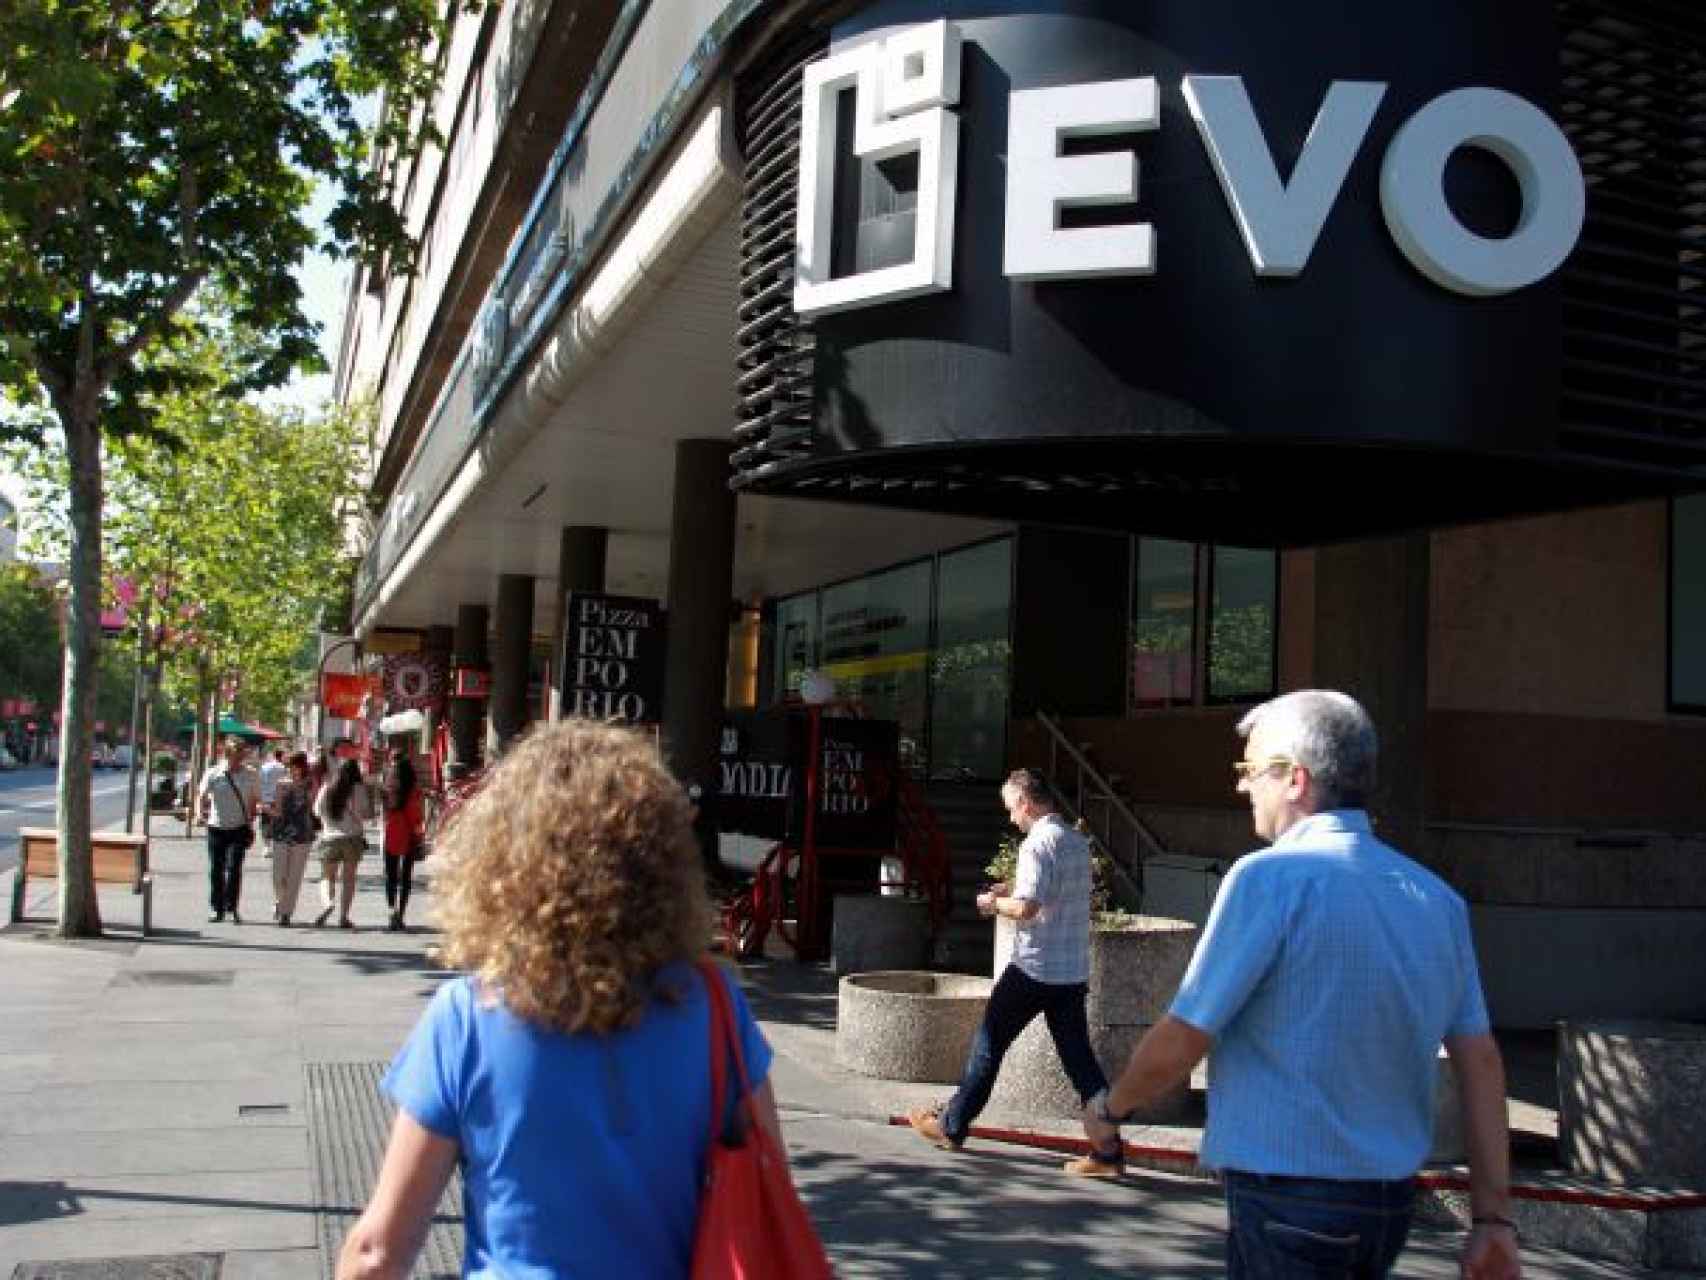 Sucursa de EVO Banco en la calle Serrano de Madrid